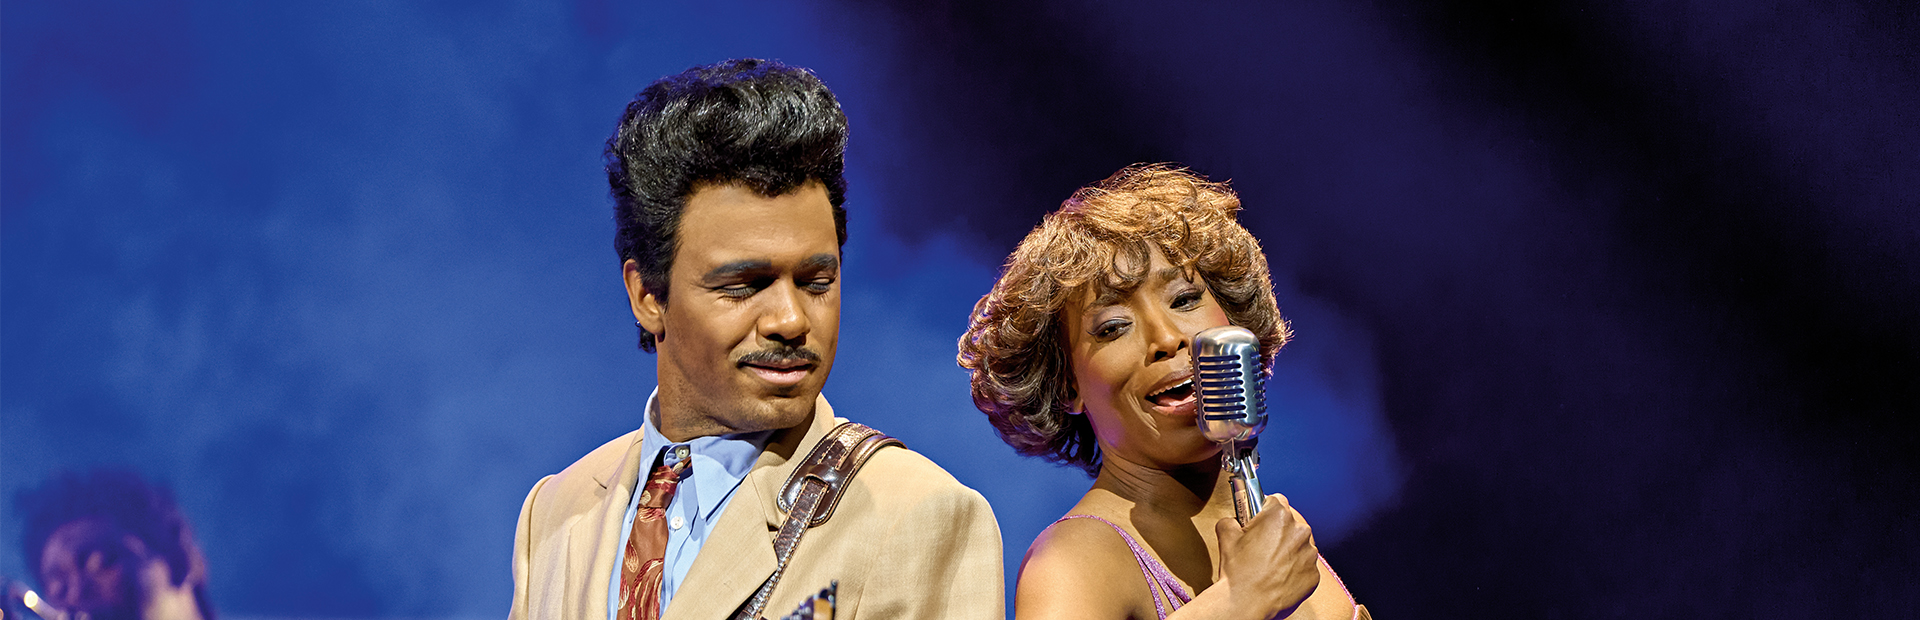 Tina Turner singing with Ike Turner on stage - live performance